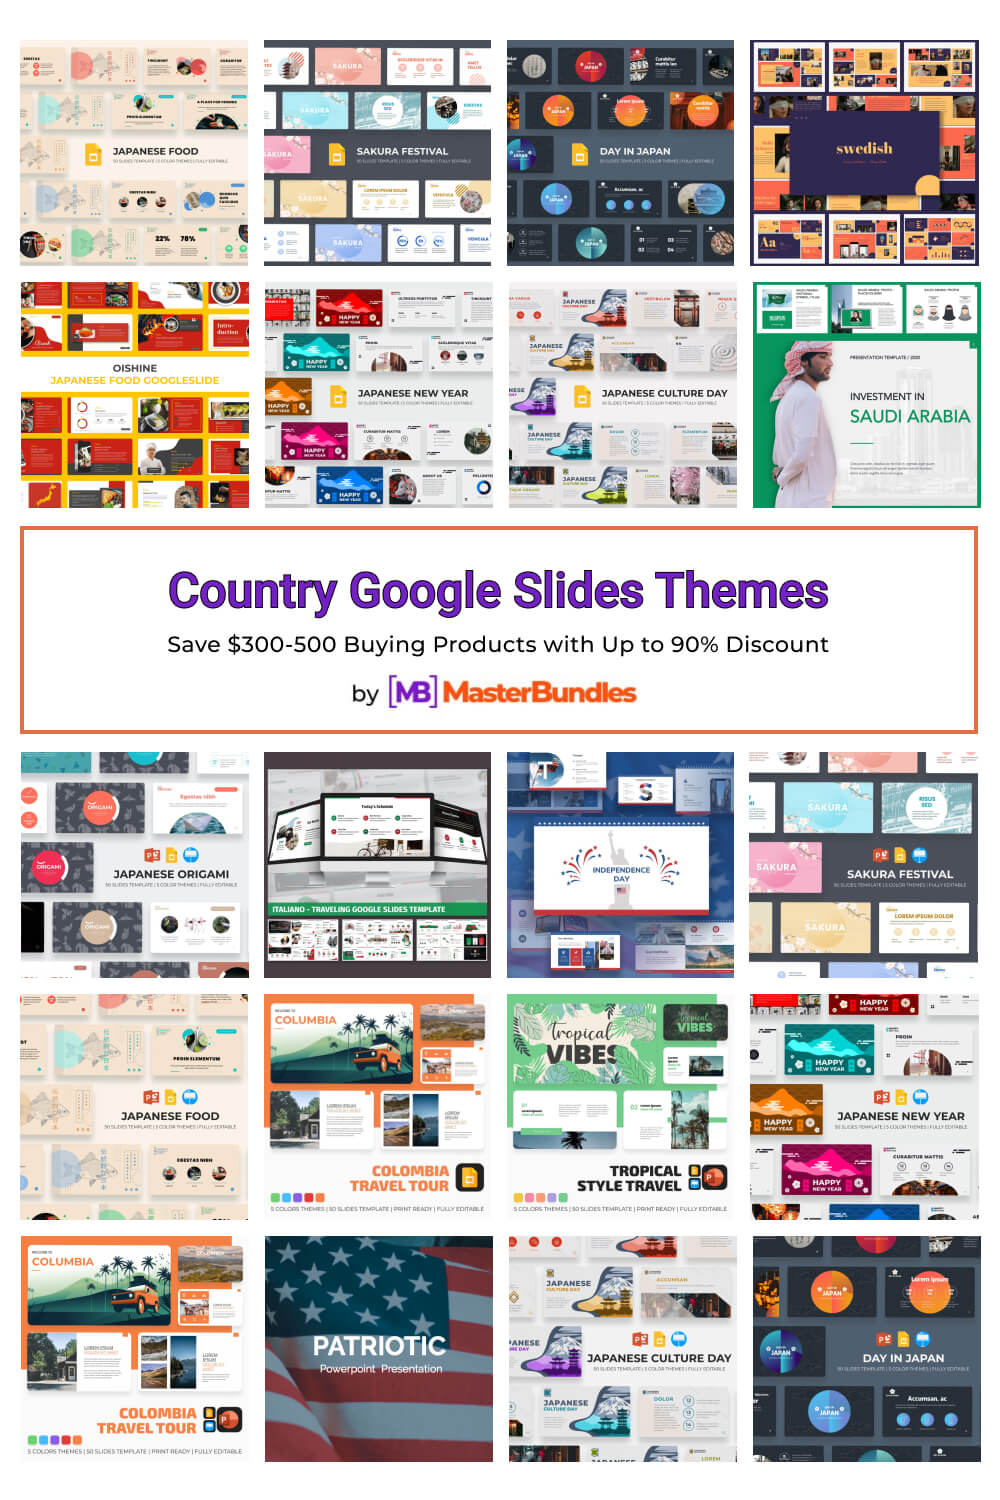 country google slides themes pinterest image.